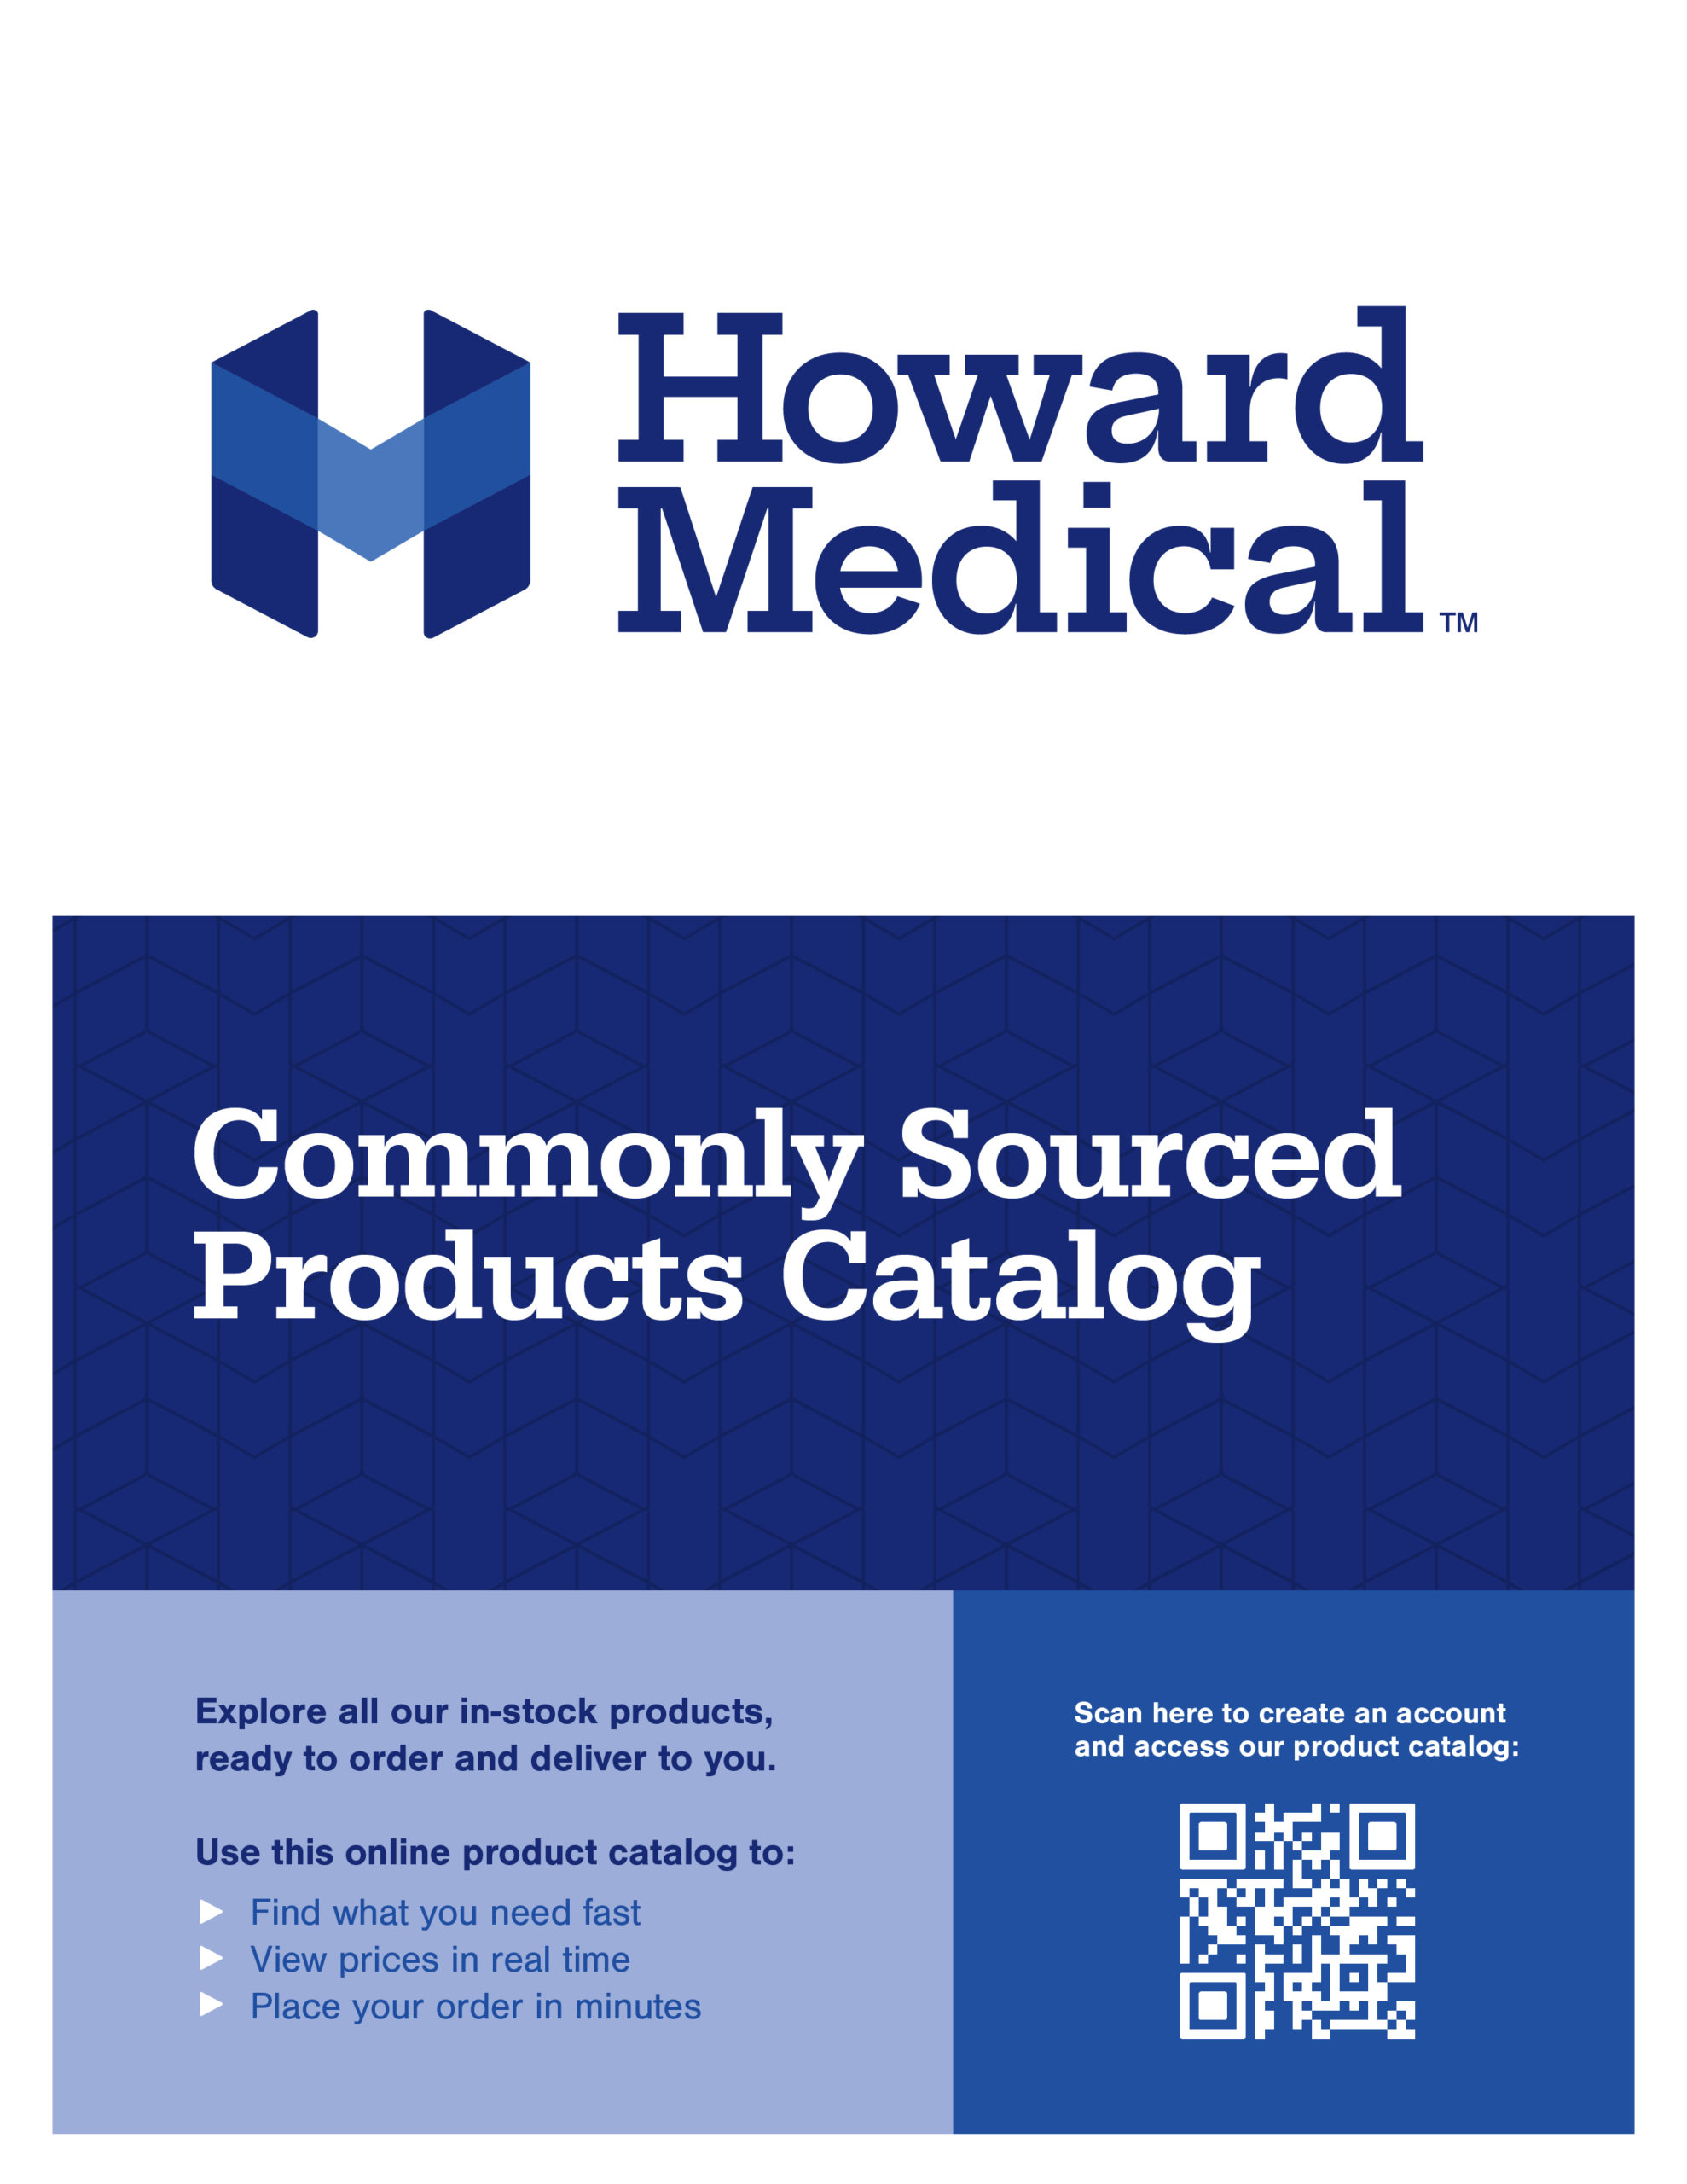 Howard Medical Top Products Catalog